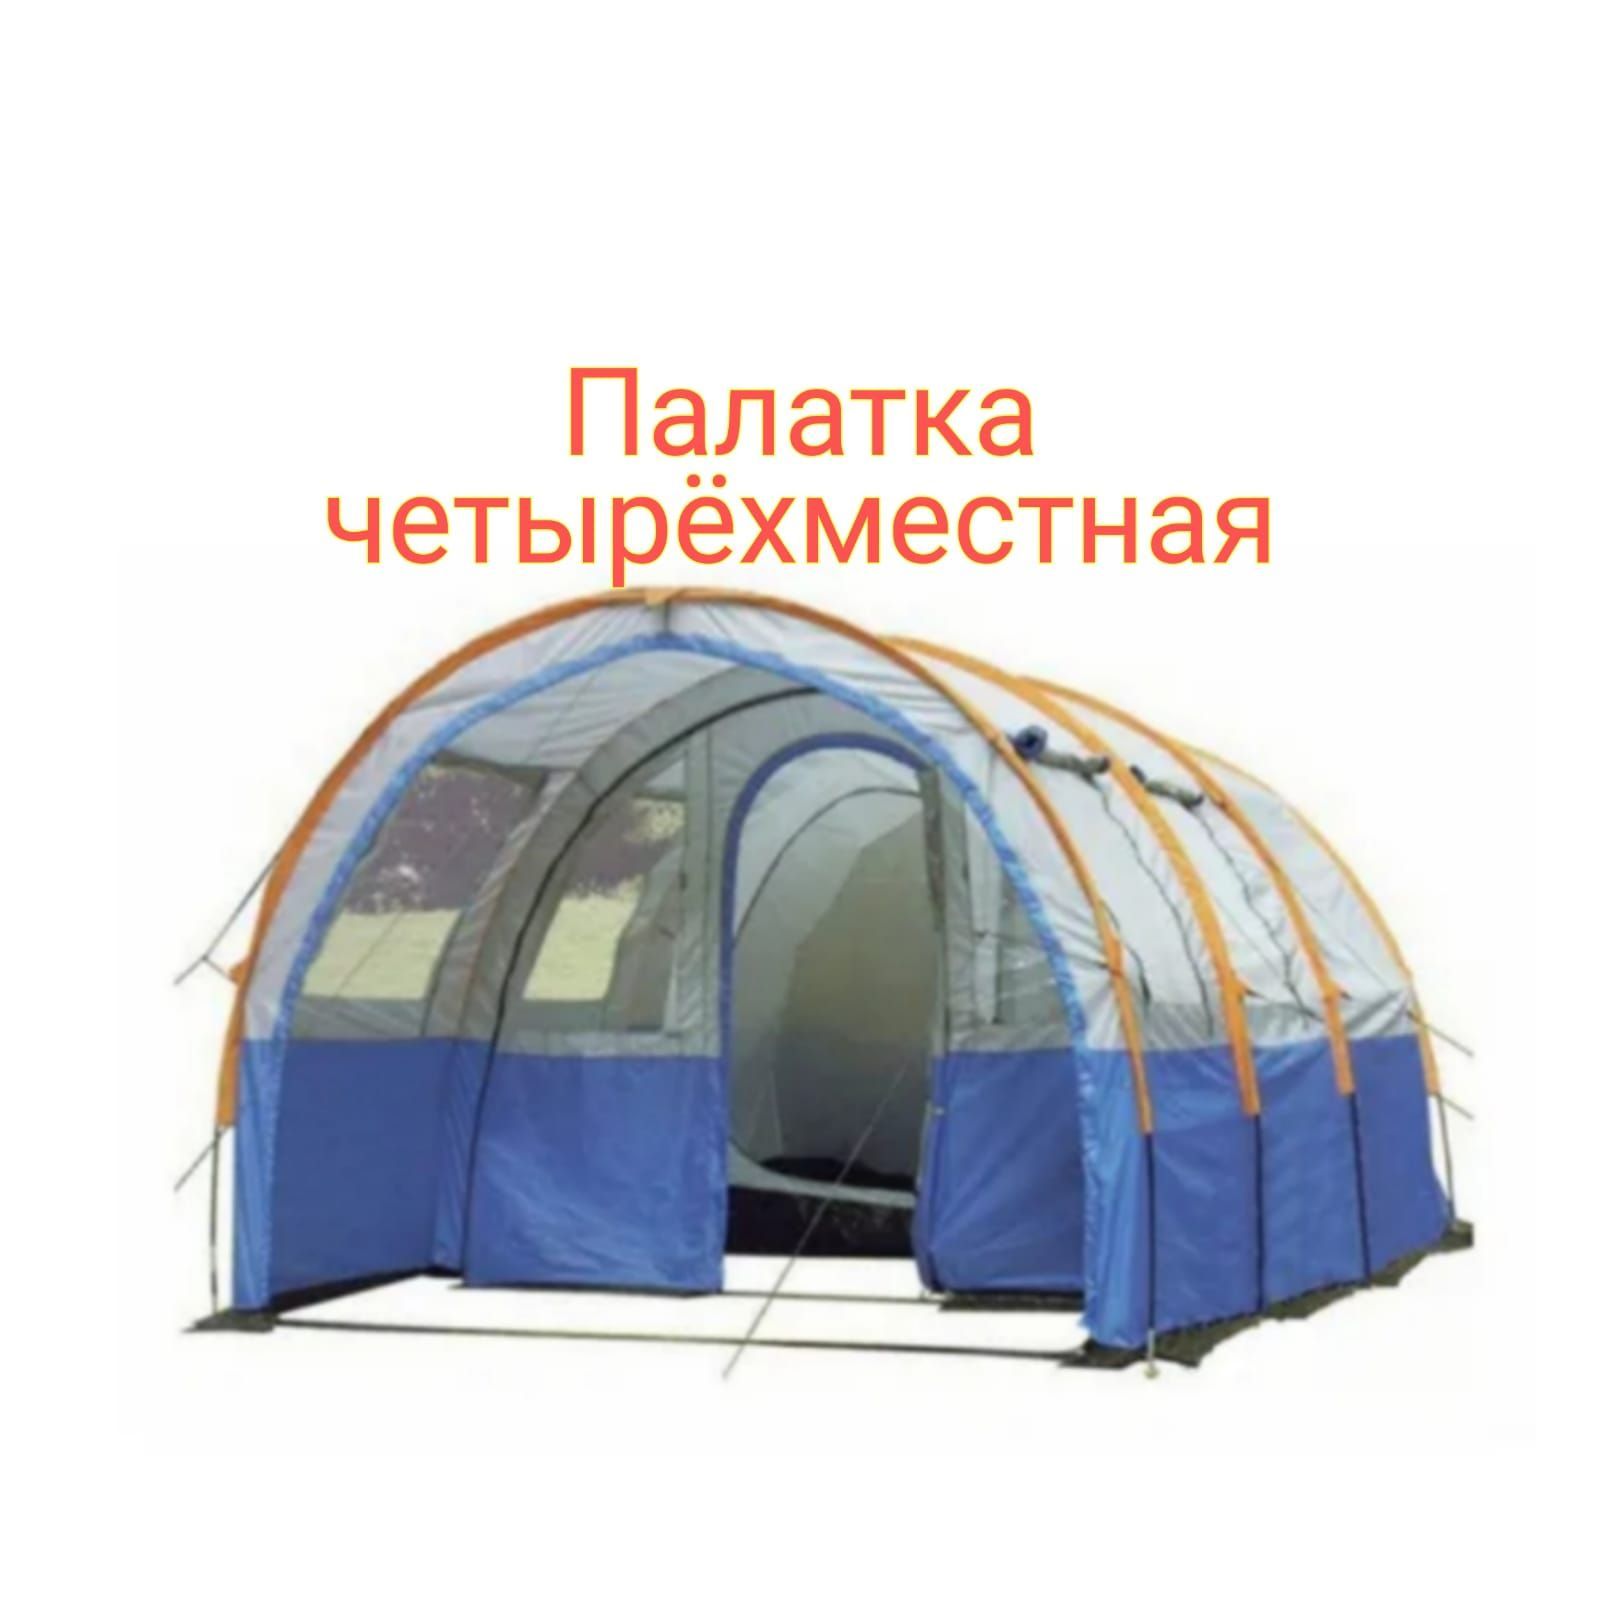 Рейтинг туристических палаток 4. Палатка кемпинговая Lanyu ly-1801. Палатка 4-х местная ангар, Lanyu ly-1801. Палатка St-8010 - 4-местная кемпинговая. Палатка 4-х местная Lanyu 1801 260x480x200см.